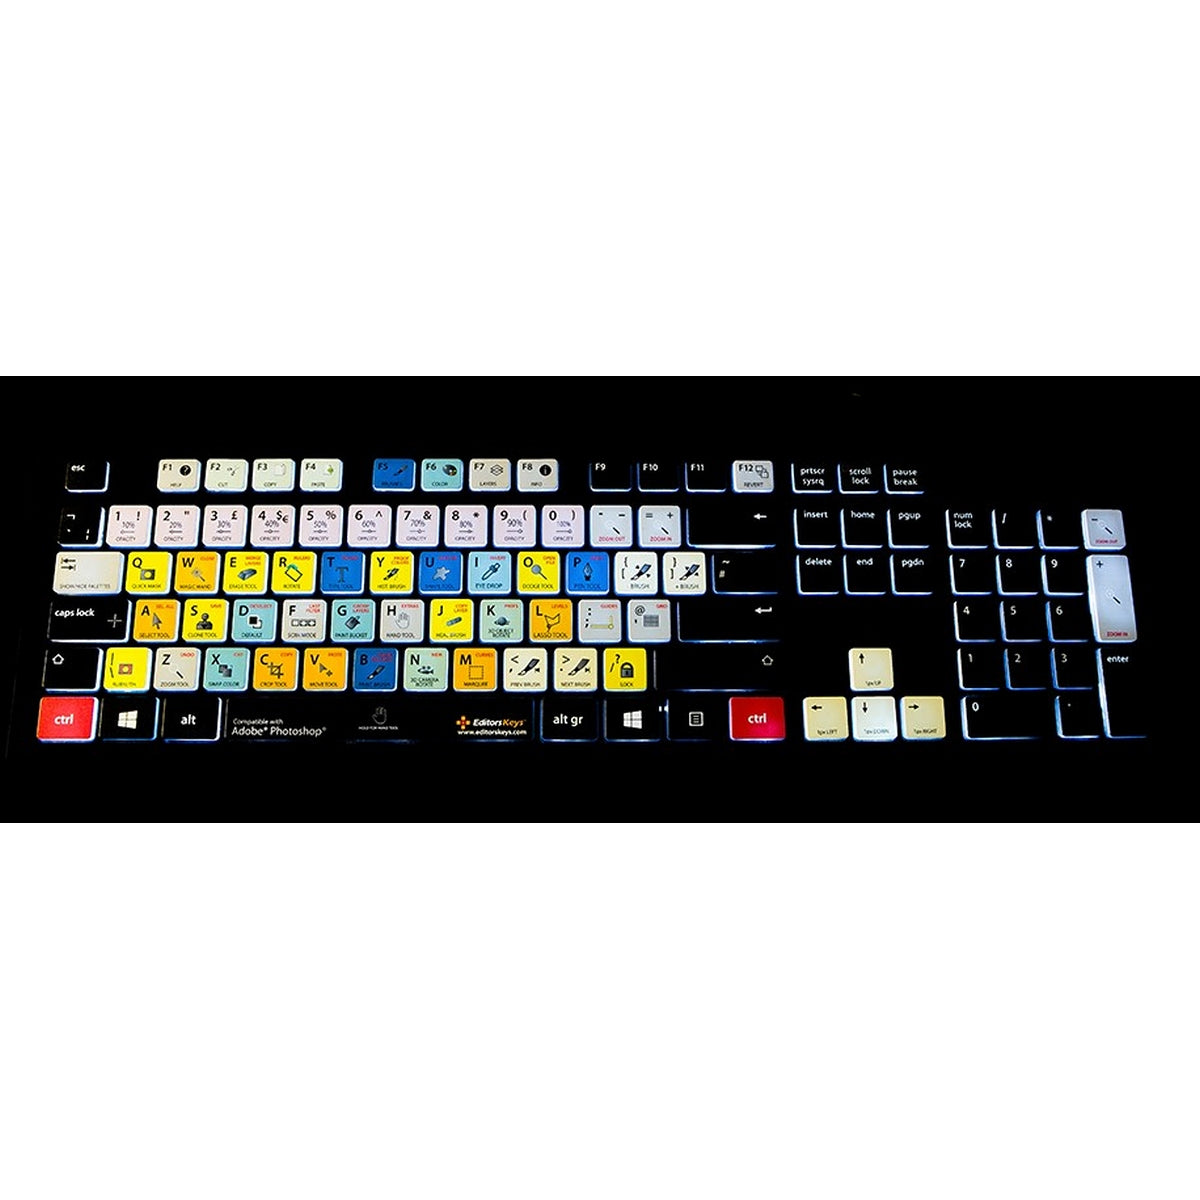 Editors Keys Dedicated Keyboard for Photoshop | PC Shortcut Backlit Keyboard